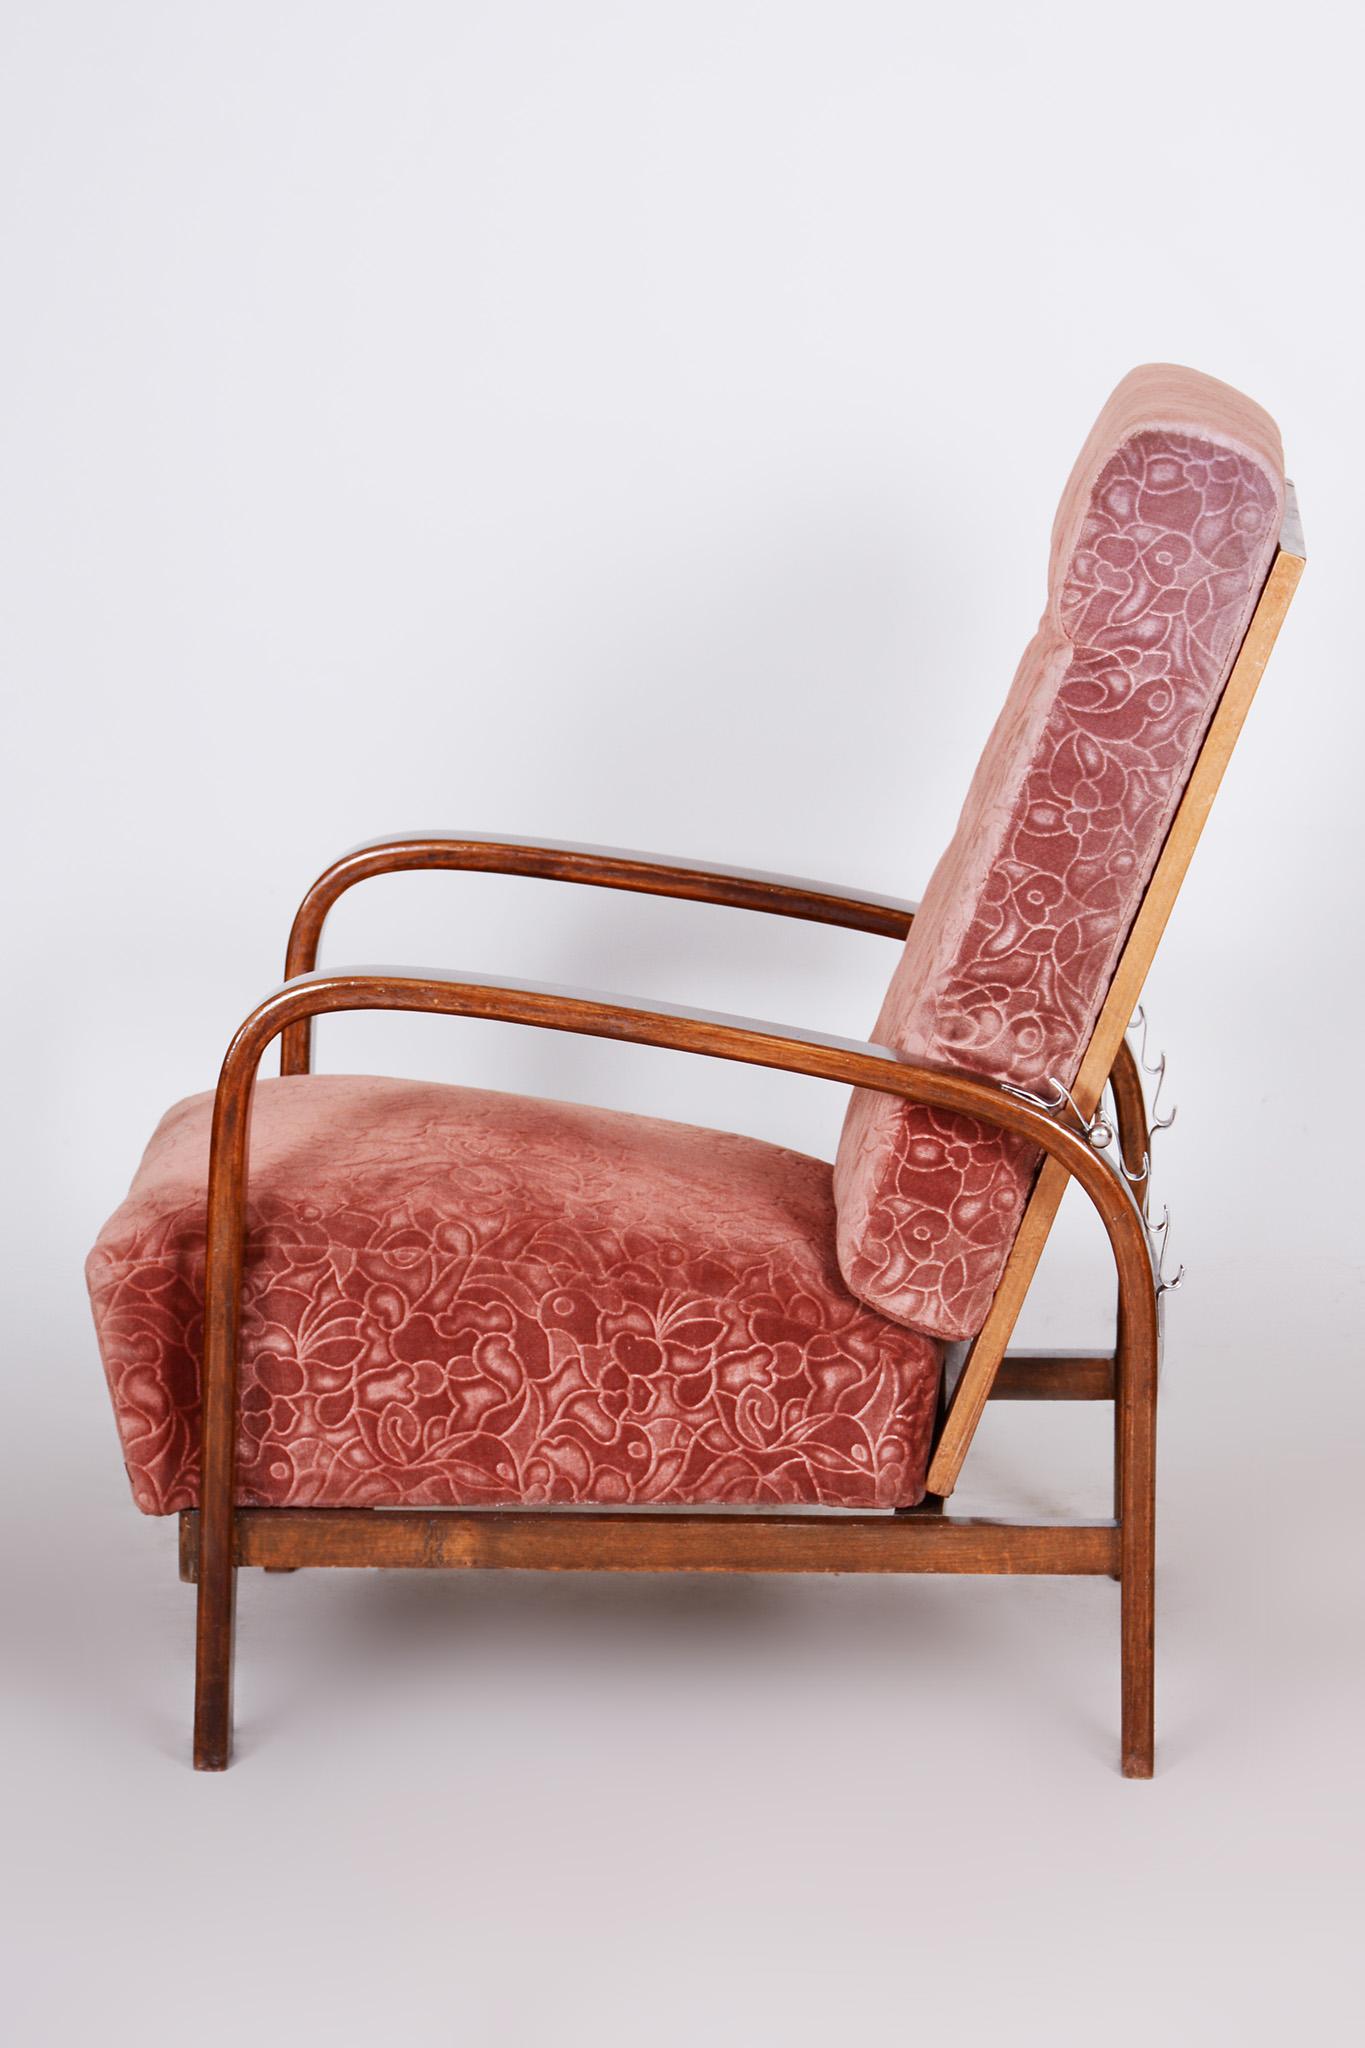 Restored Art Deco Positioning Armchair, Beech Solid Wood, Walnut, 1930s, Czechia For Sale 1